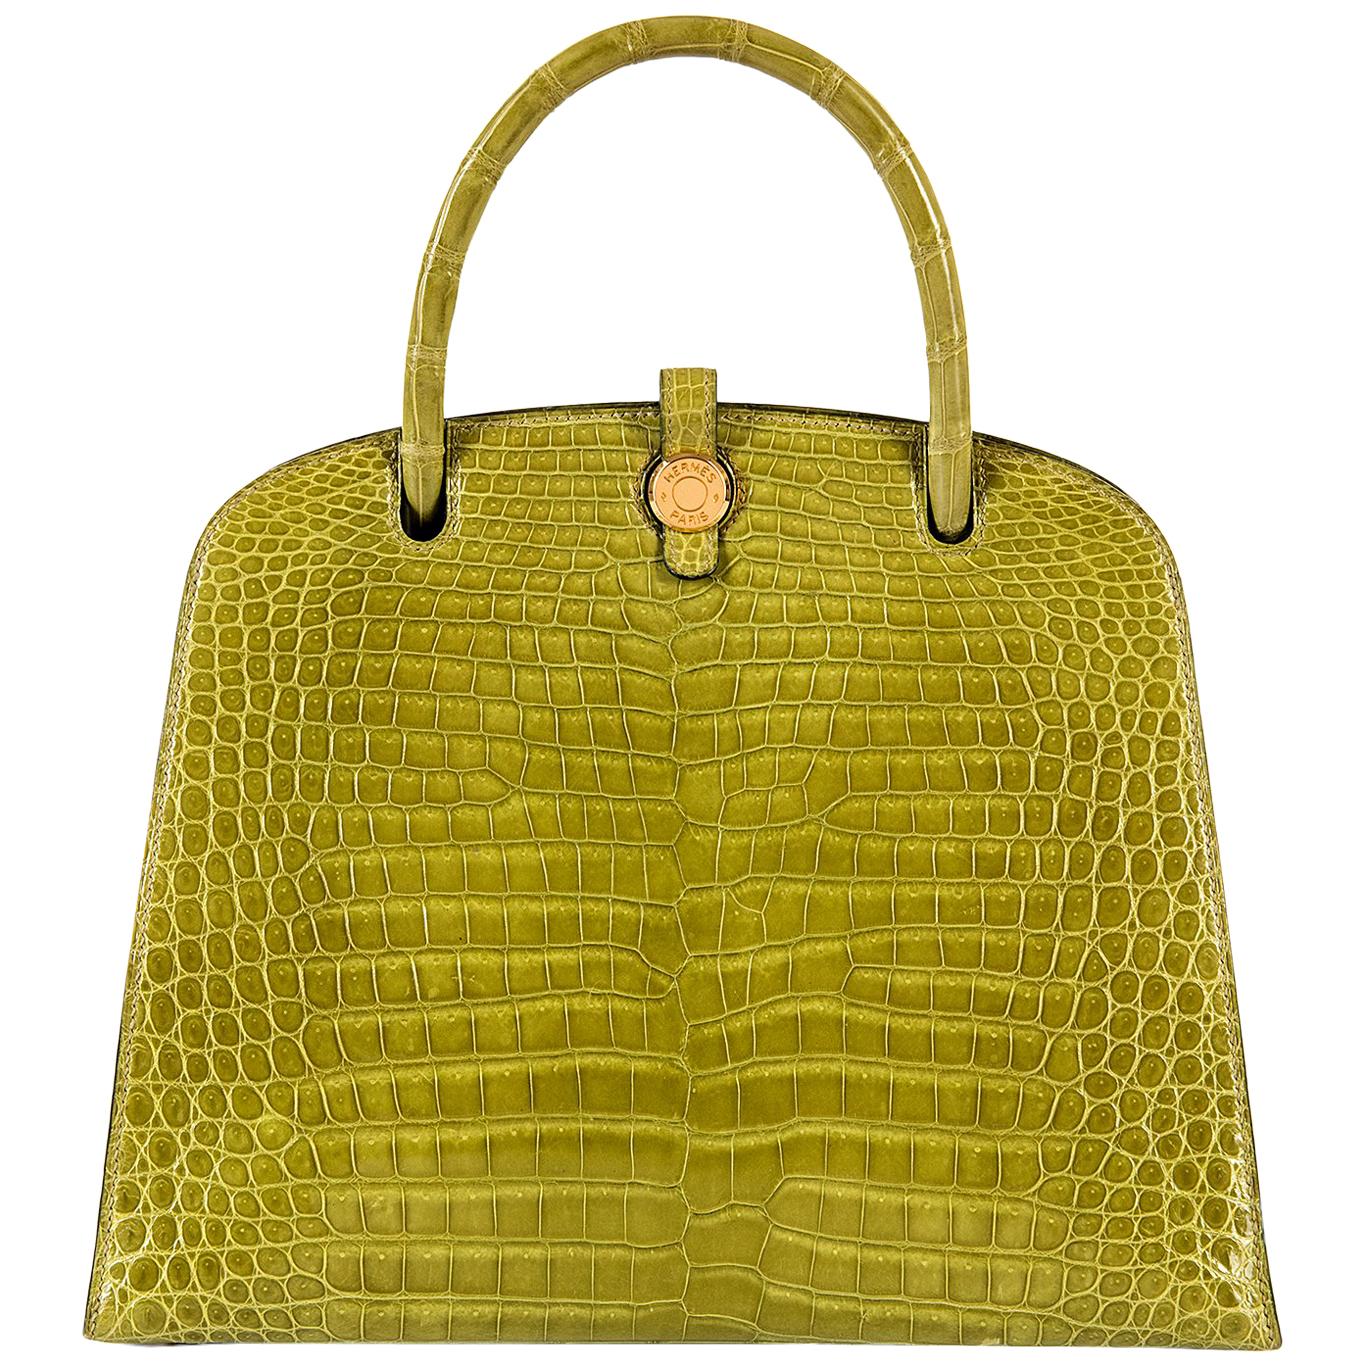 Hermes Crocodile Sac Dalvy Vert Chartreuse with Gold 30cm Bag